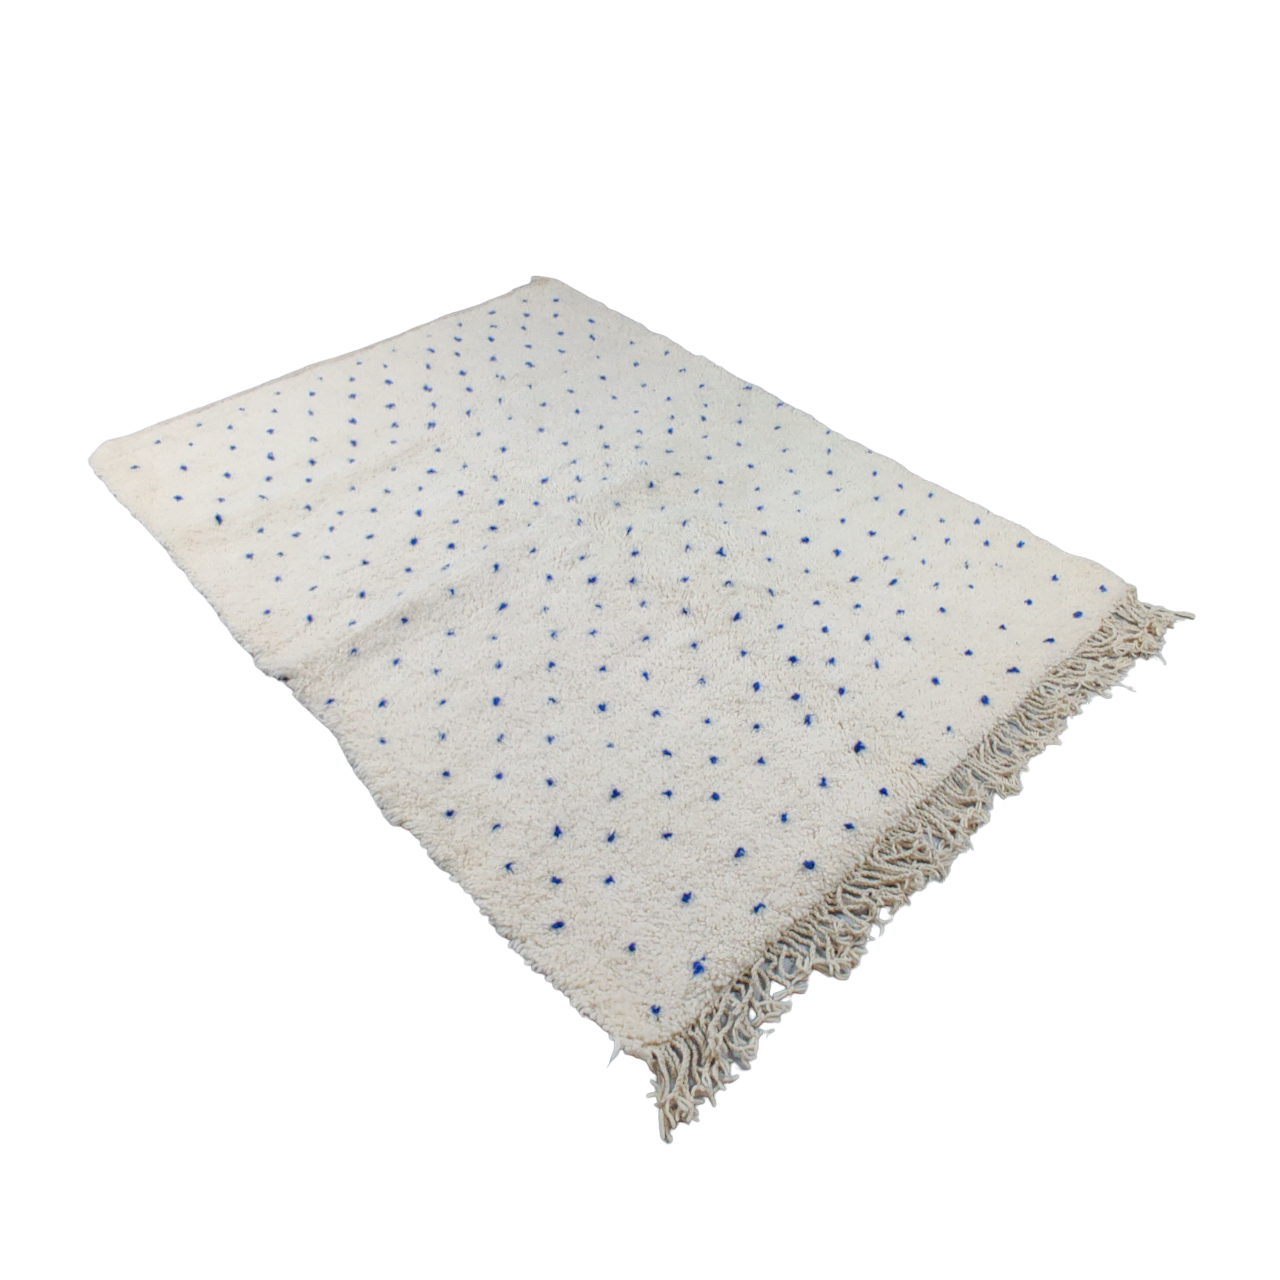 tapis marocain blanc et bleu